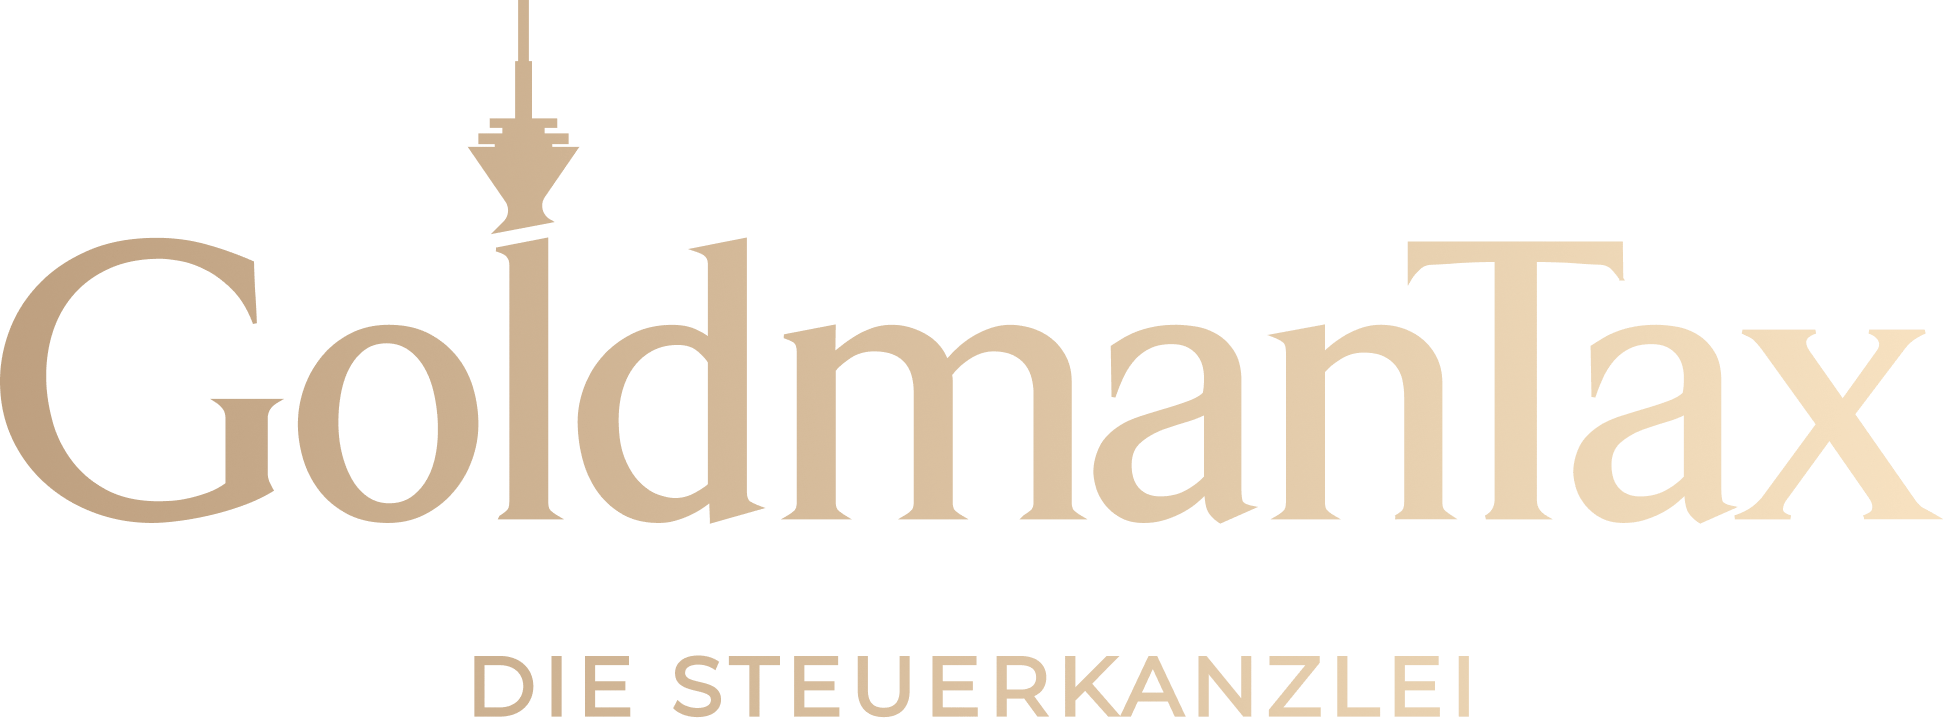 Goldmantax logo